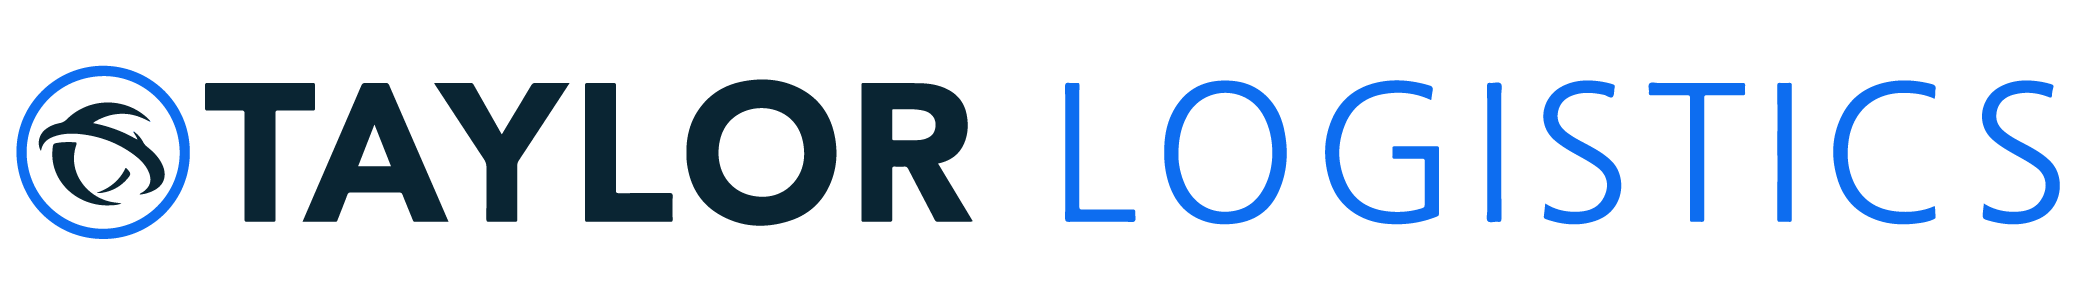 Taylor Logistics Newsletter Logo-01